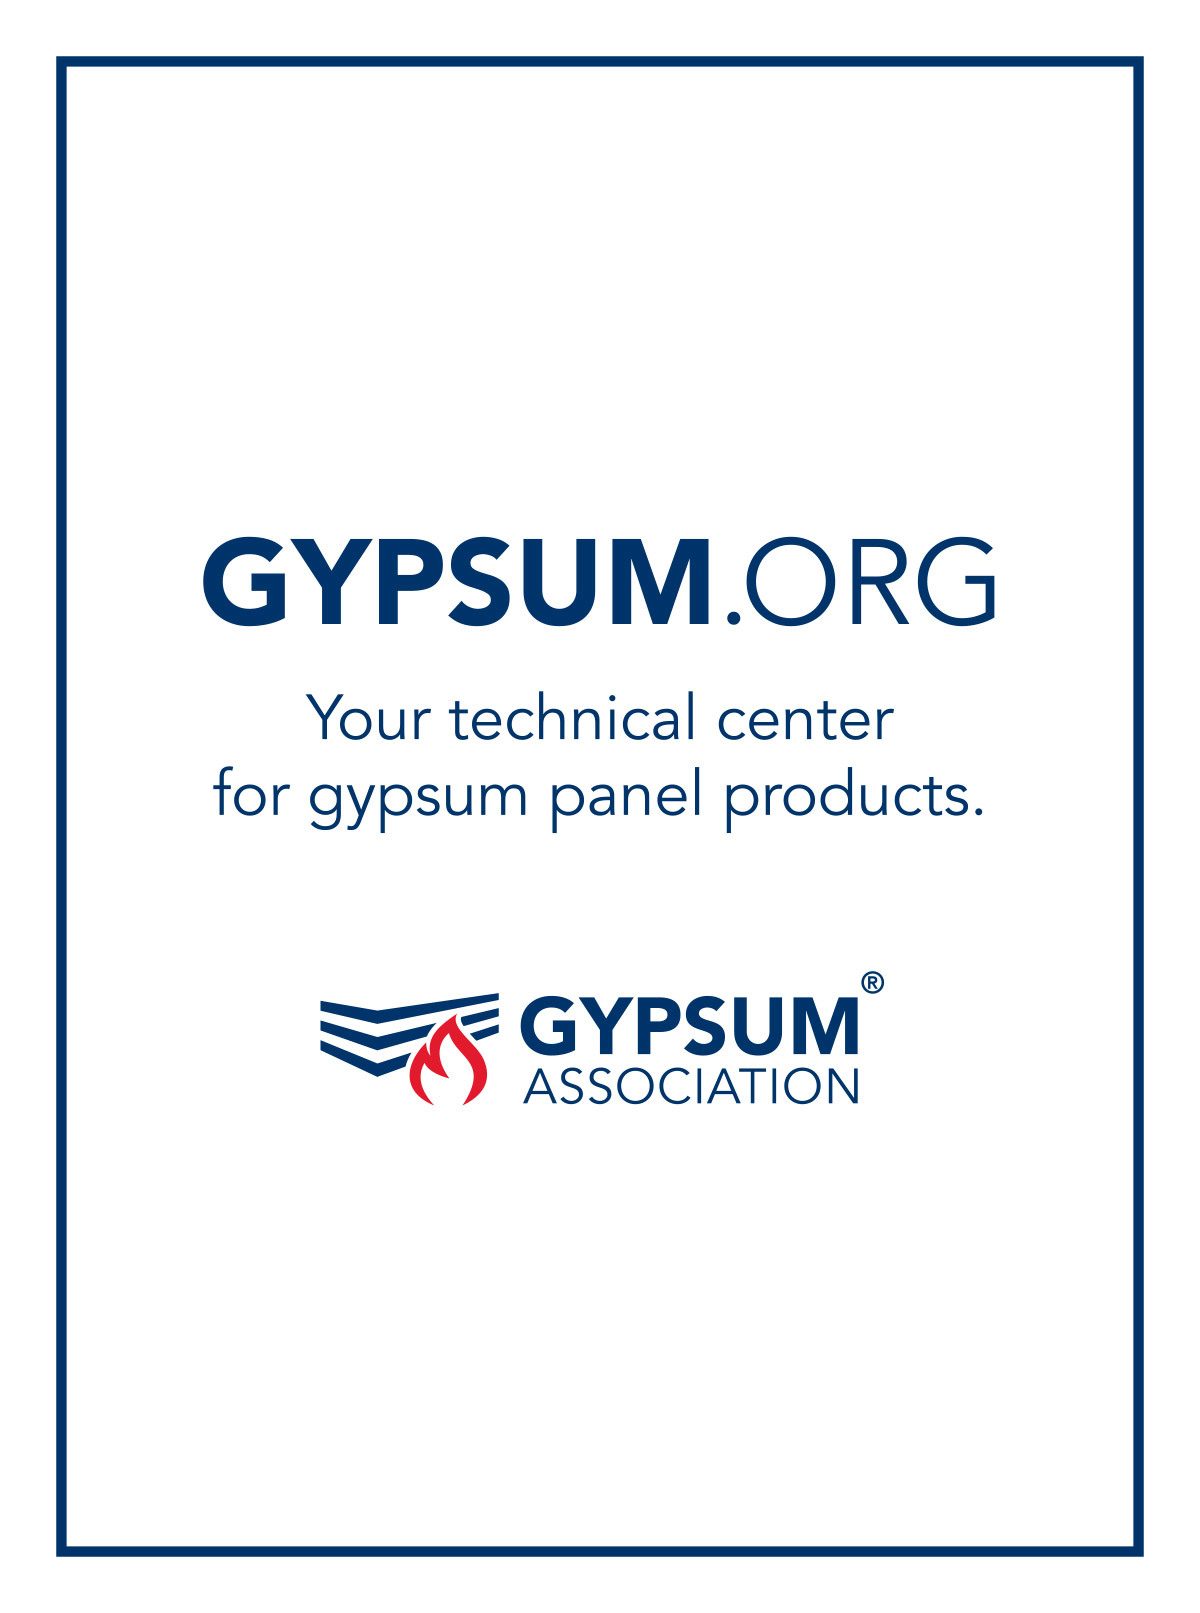 Gypsum Association